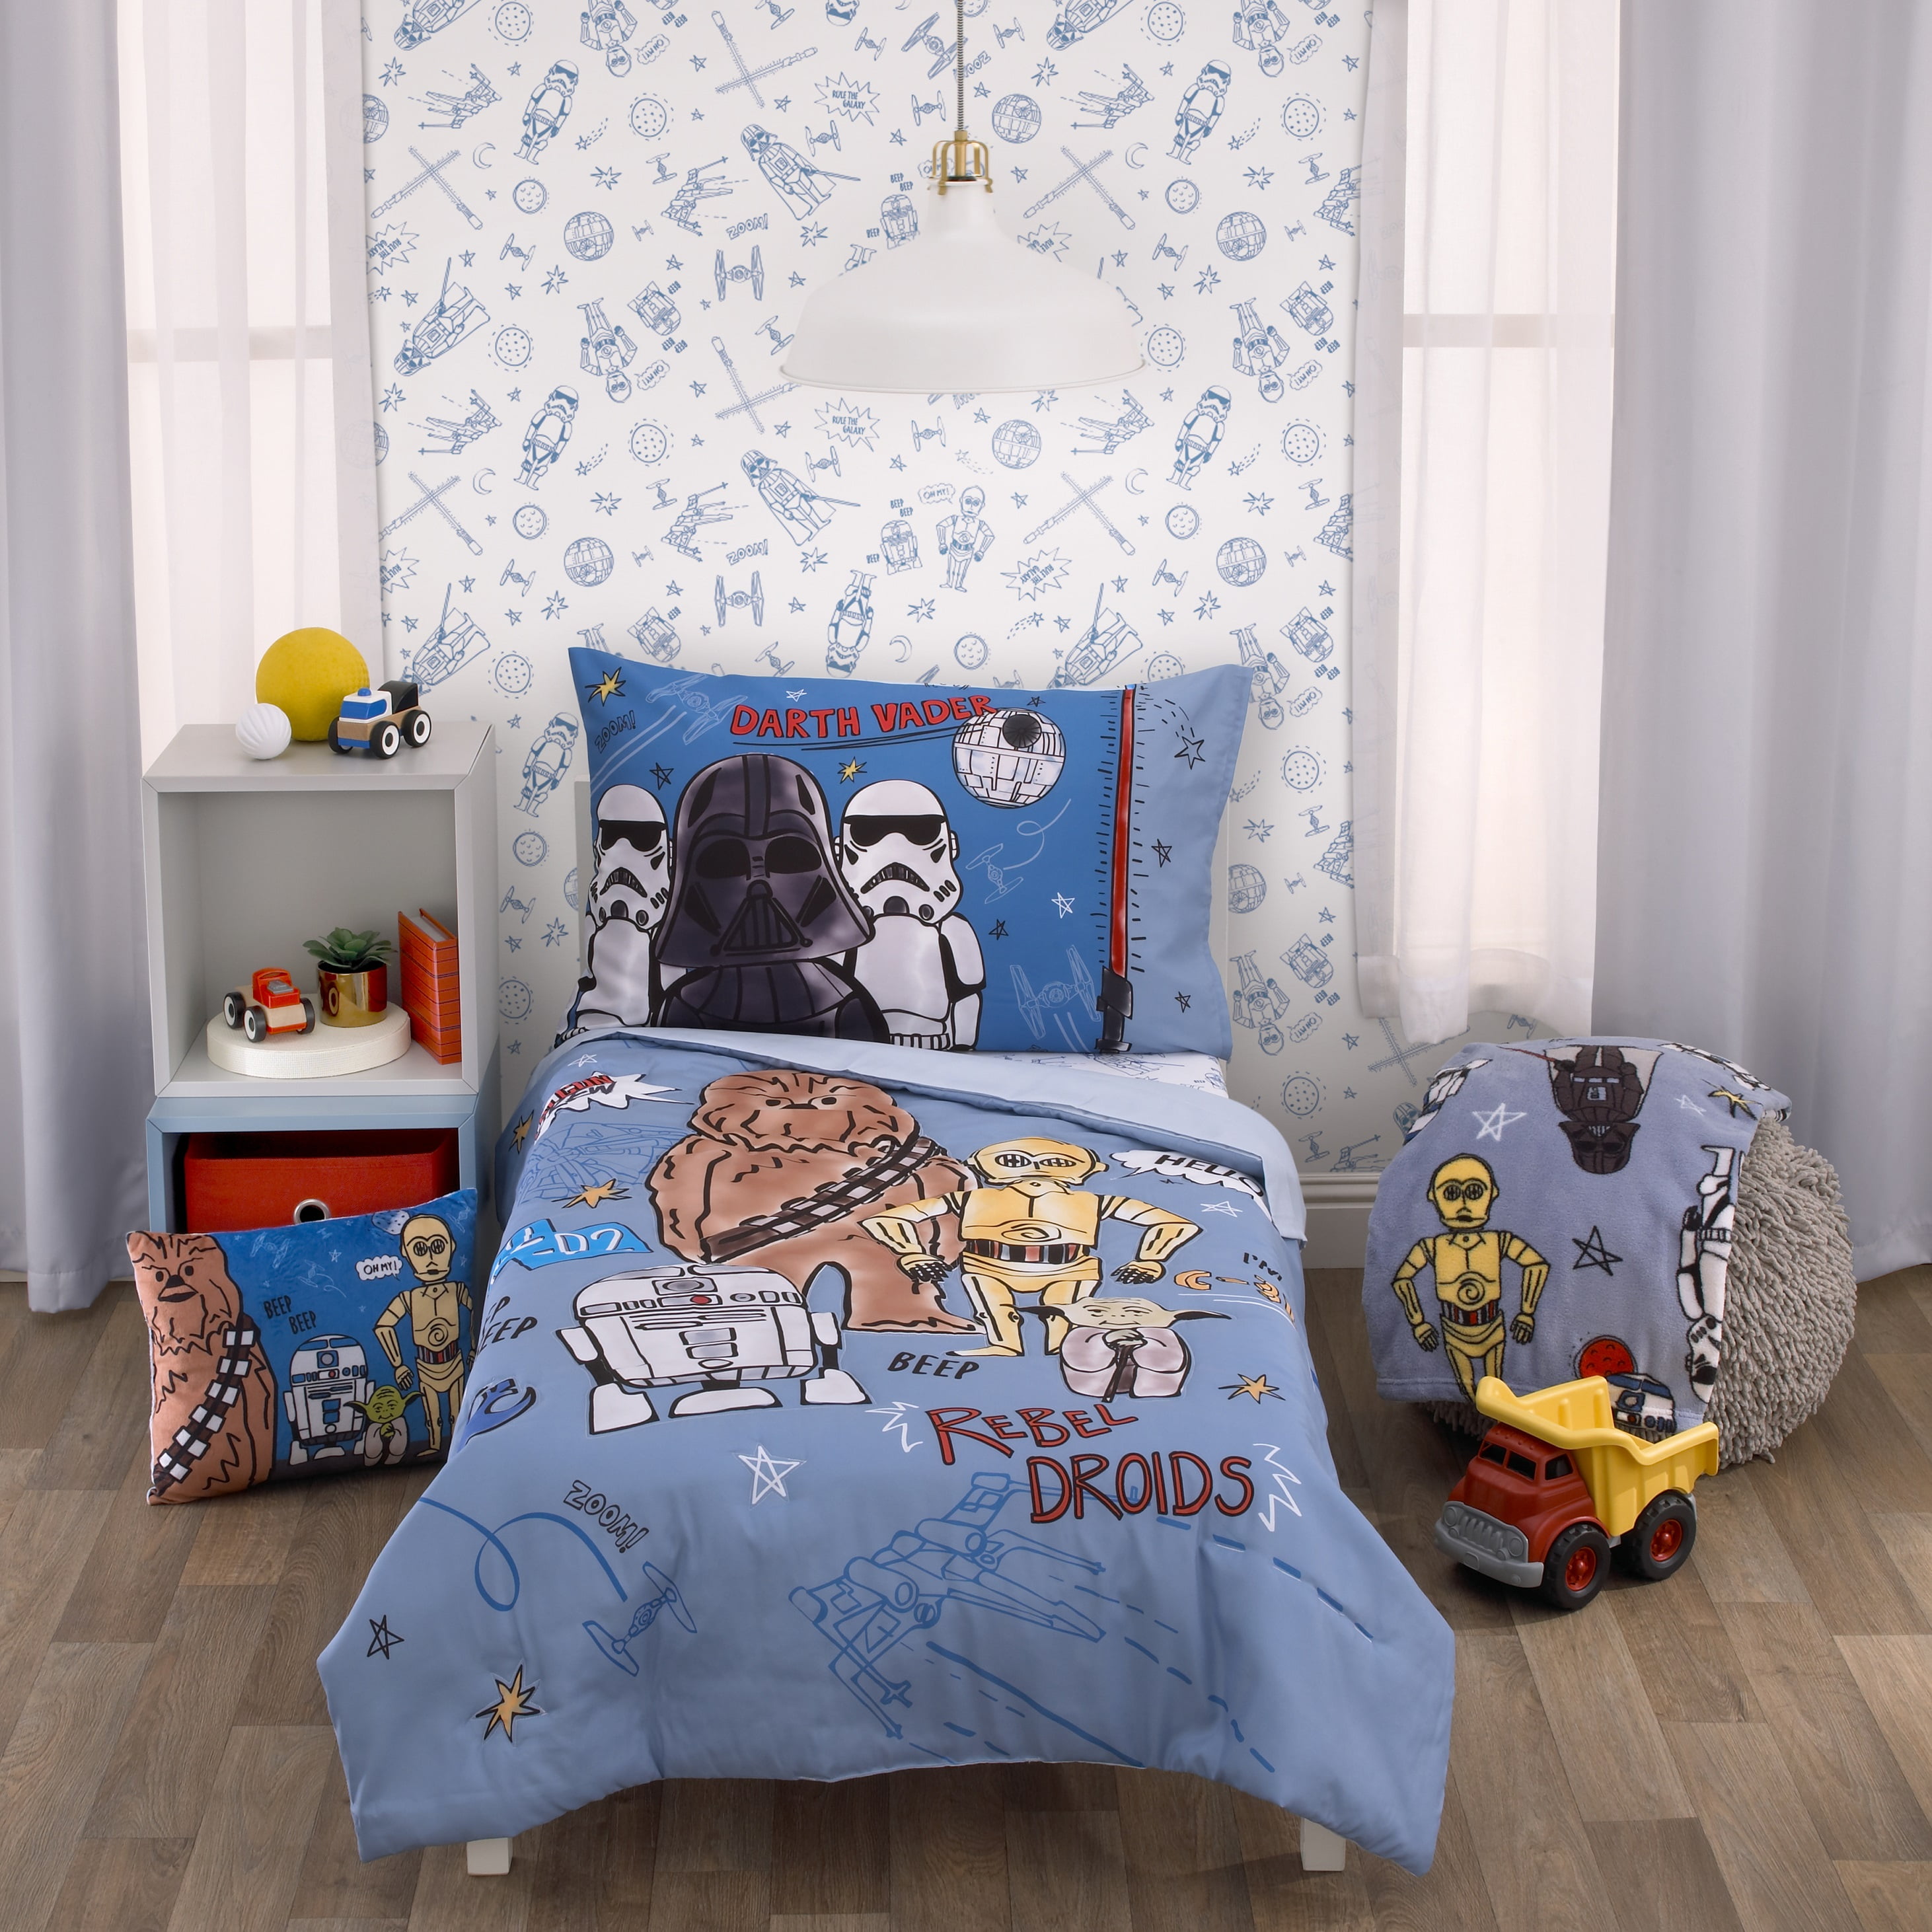 Comforter Pillow Harry Potter 4 Pc Toddler Bed Set Flat Sheet Fitted Sheet 